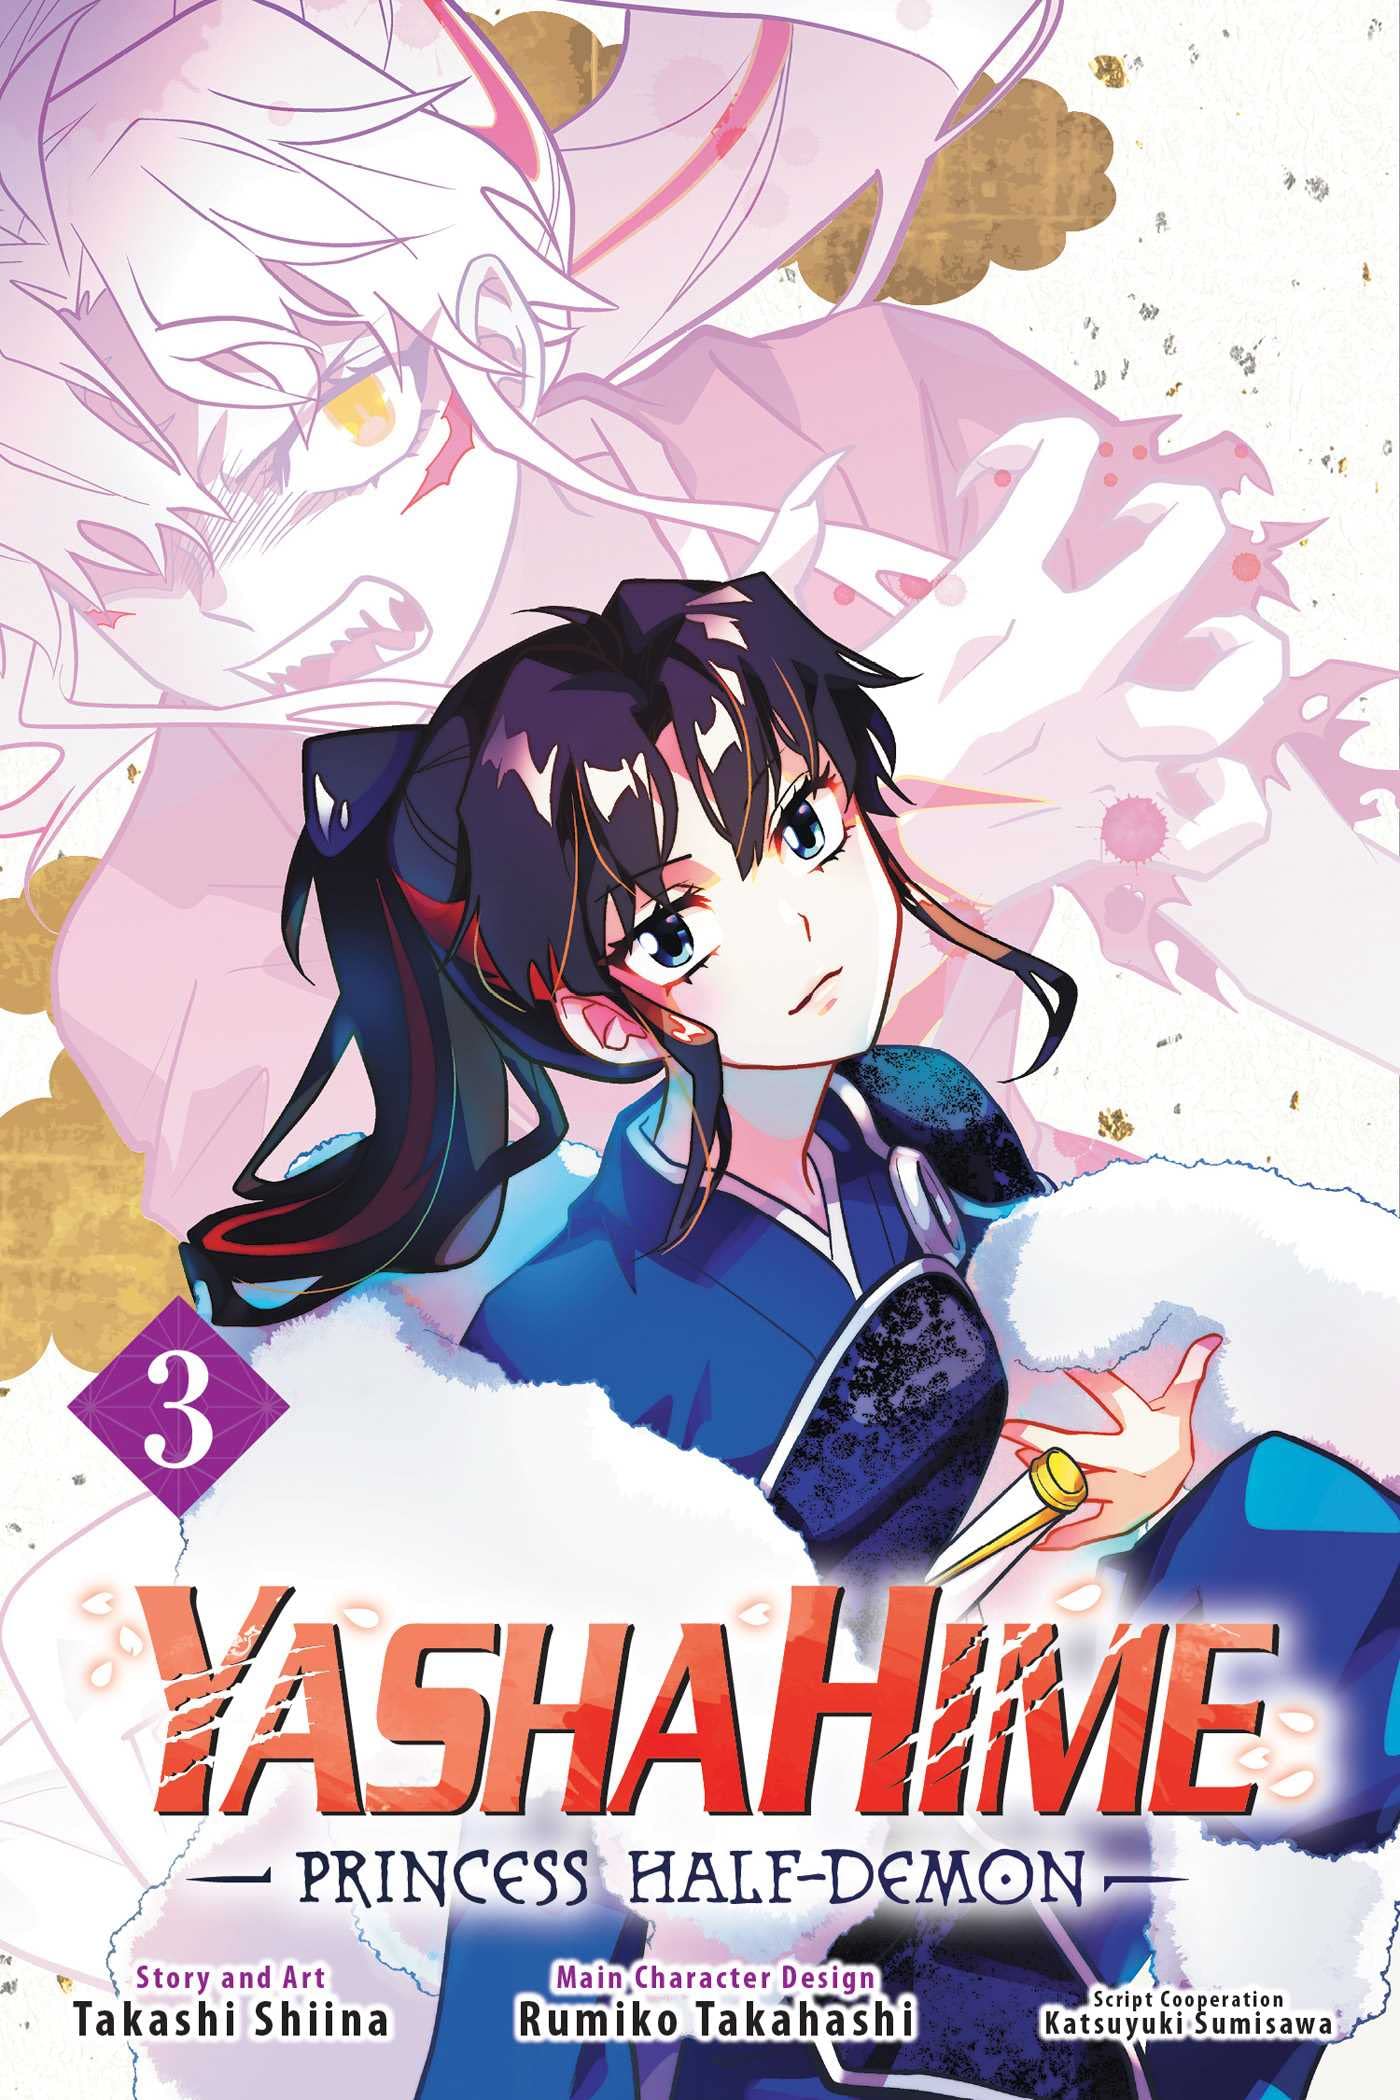 Yashahime: Princess Half-Demon Vol. 03